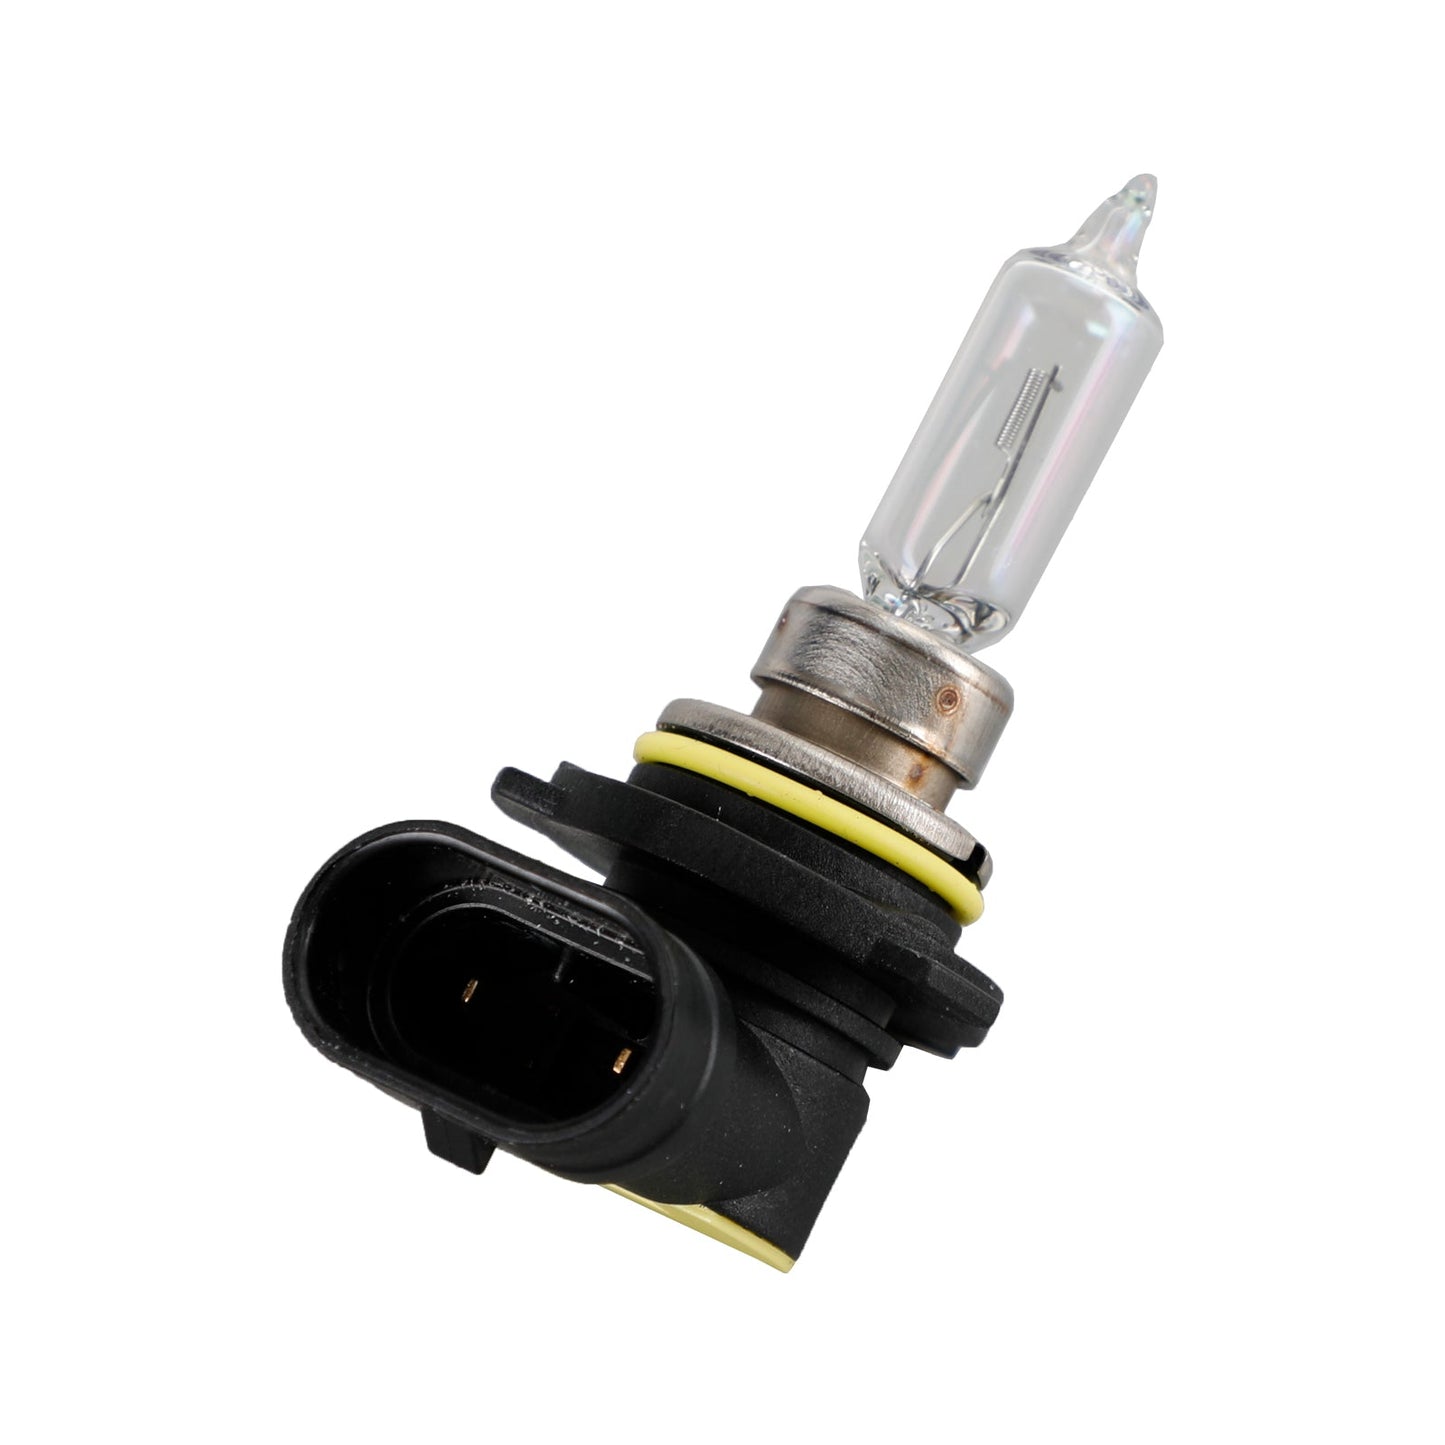 HIR2 9012 For Vosla 28032 Halogen Car Headlight Lamp 12V55W DOT